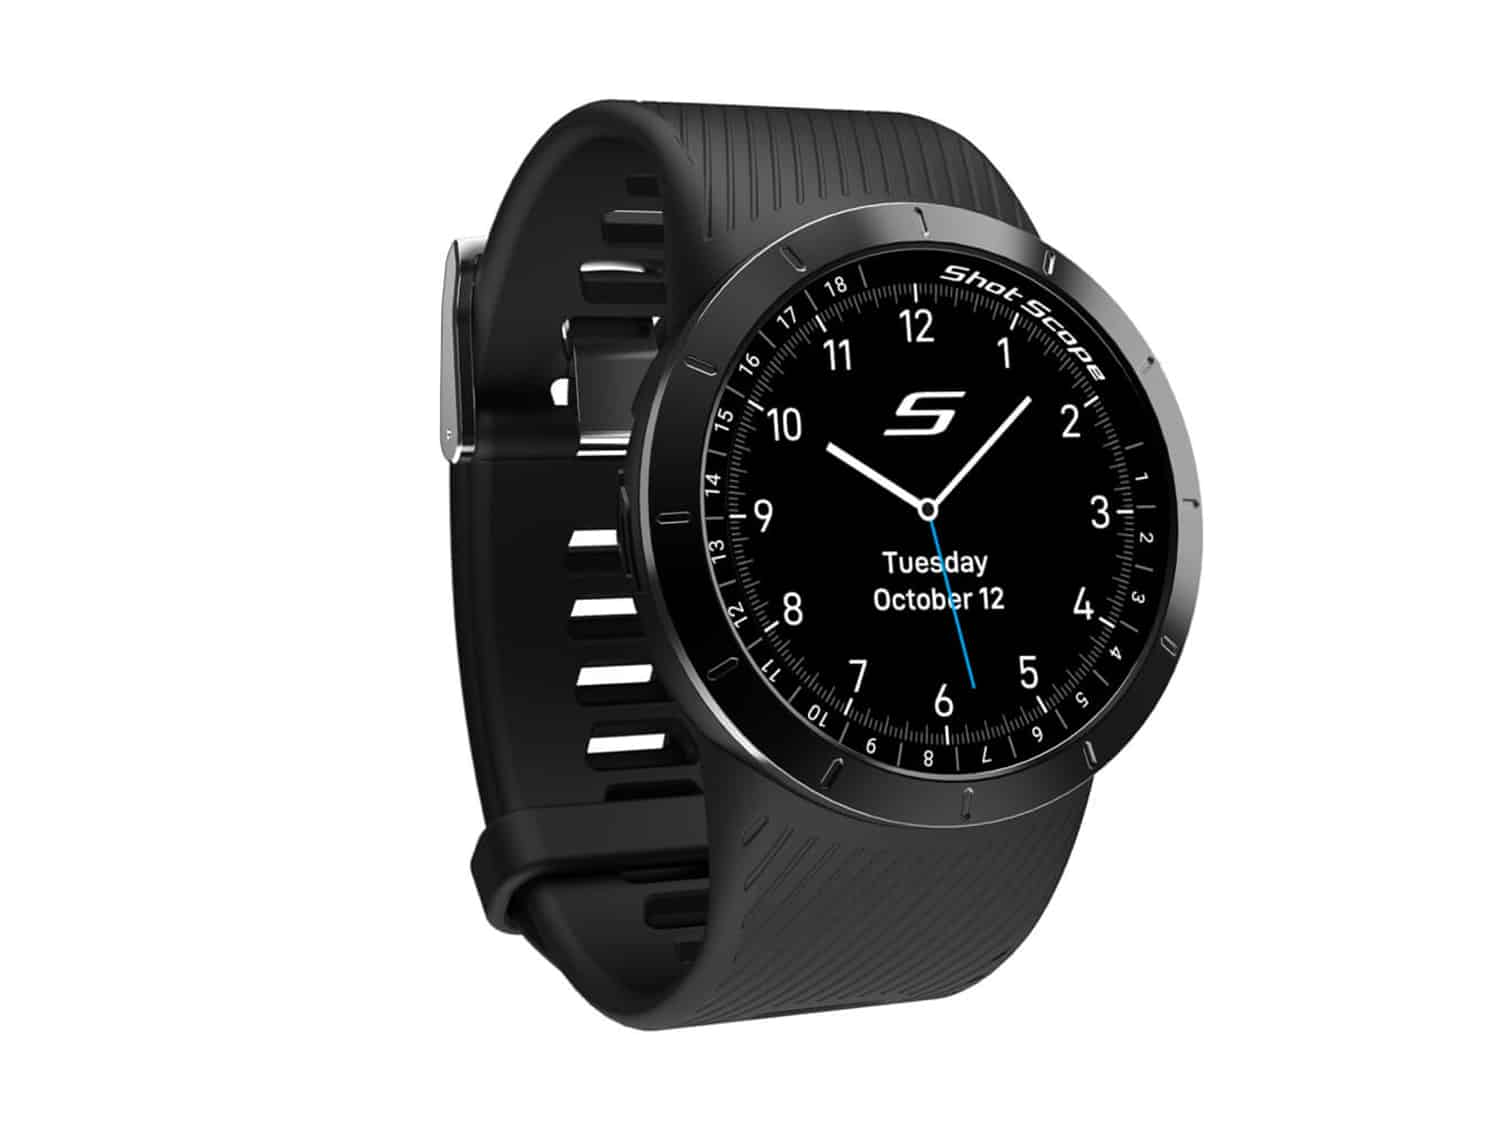 The Shot Scope X5 GPS Golf Watch in black.